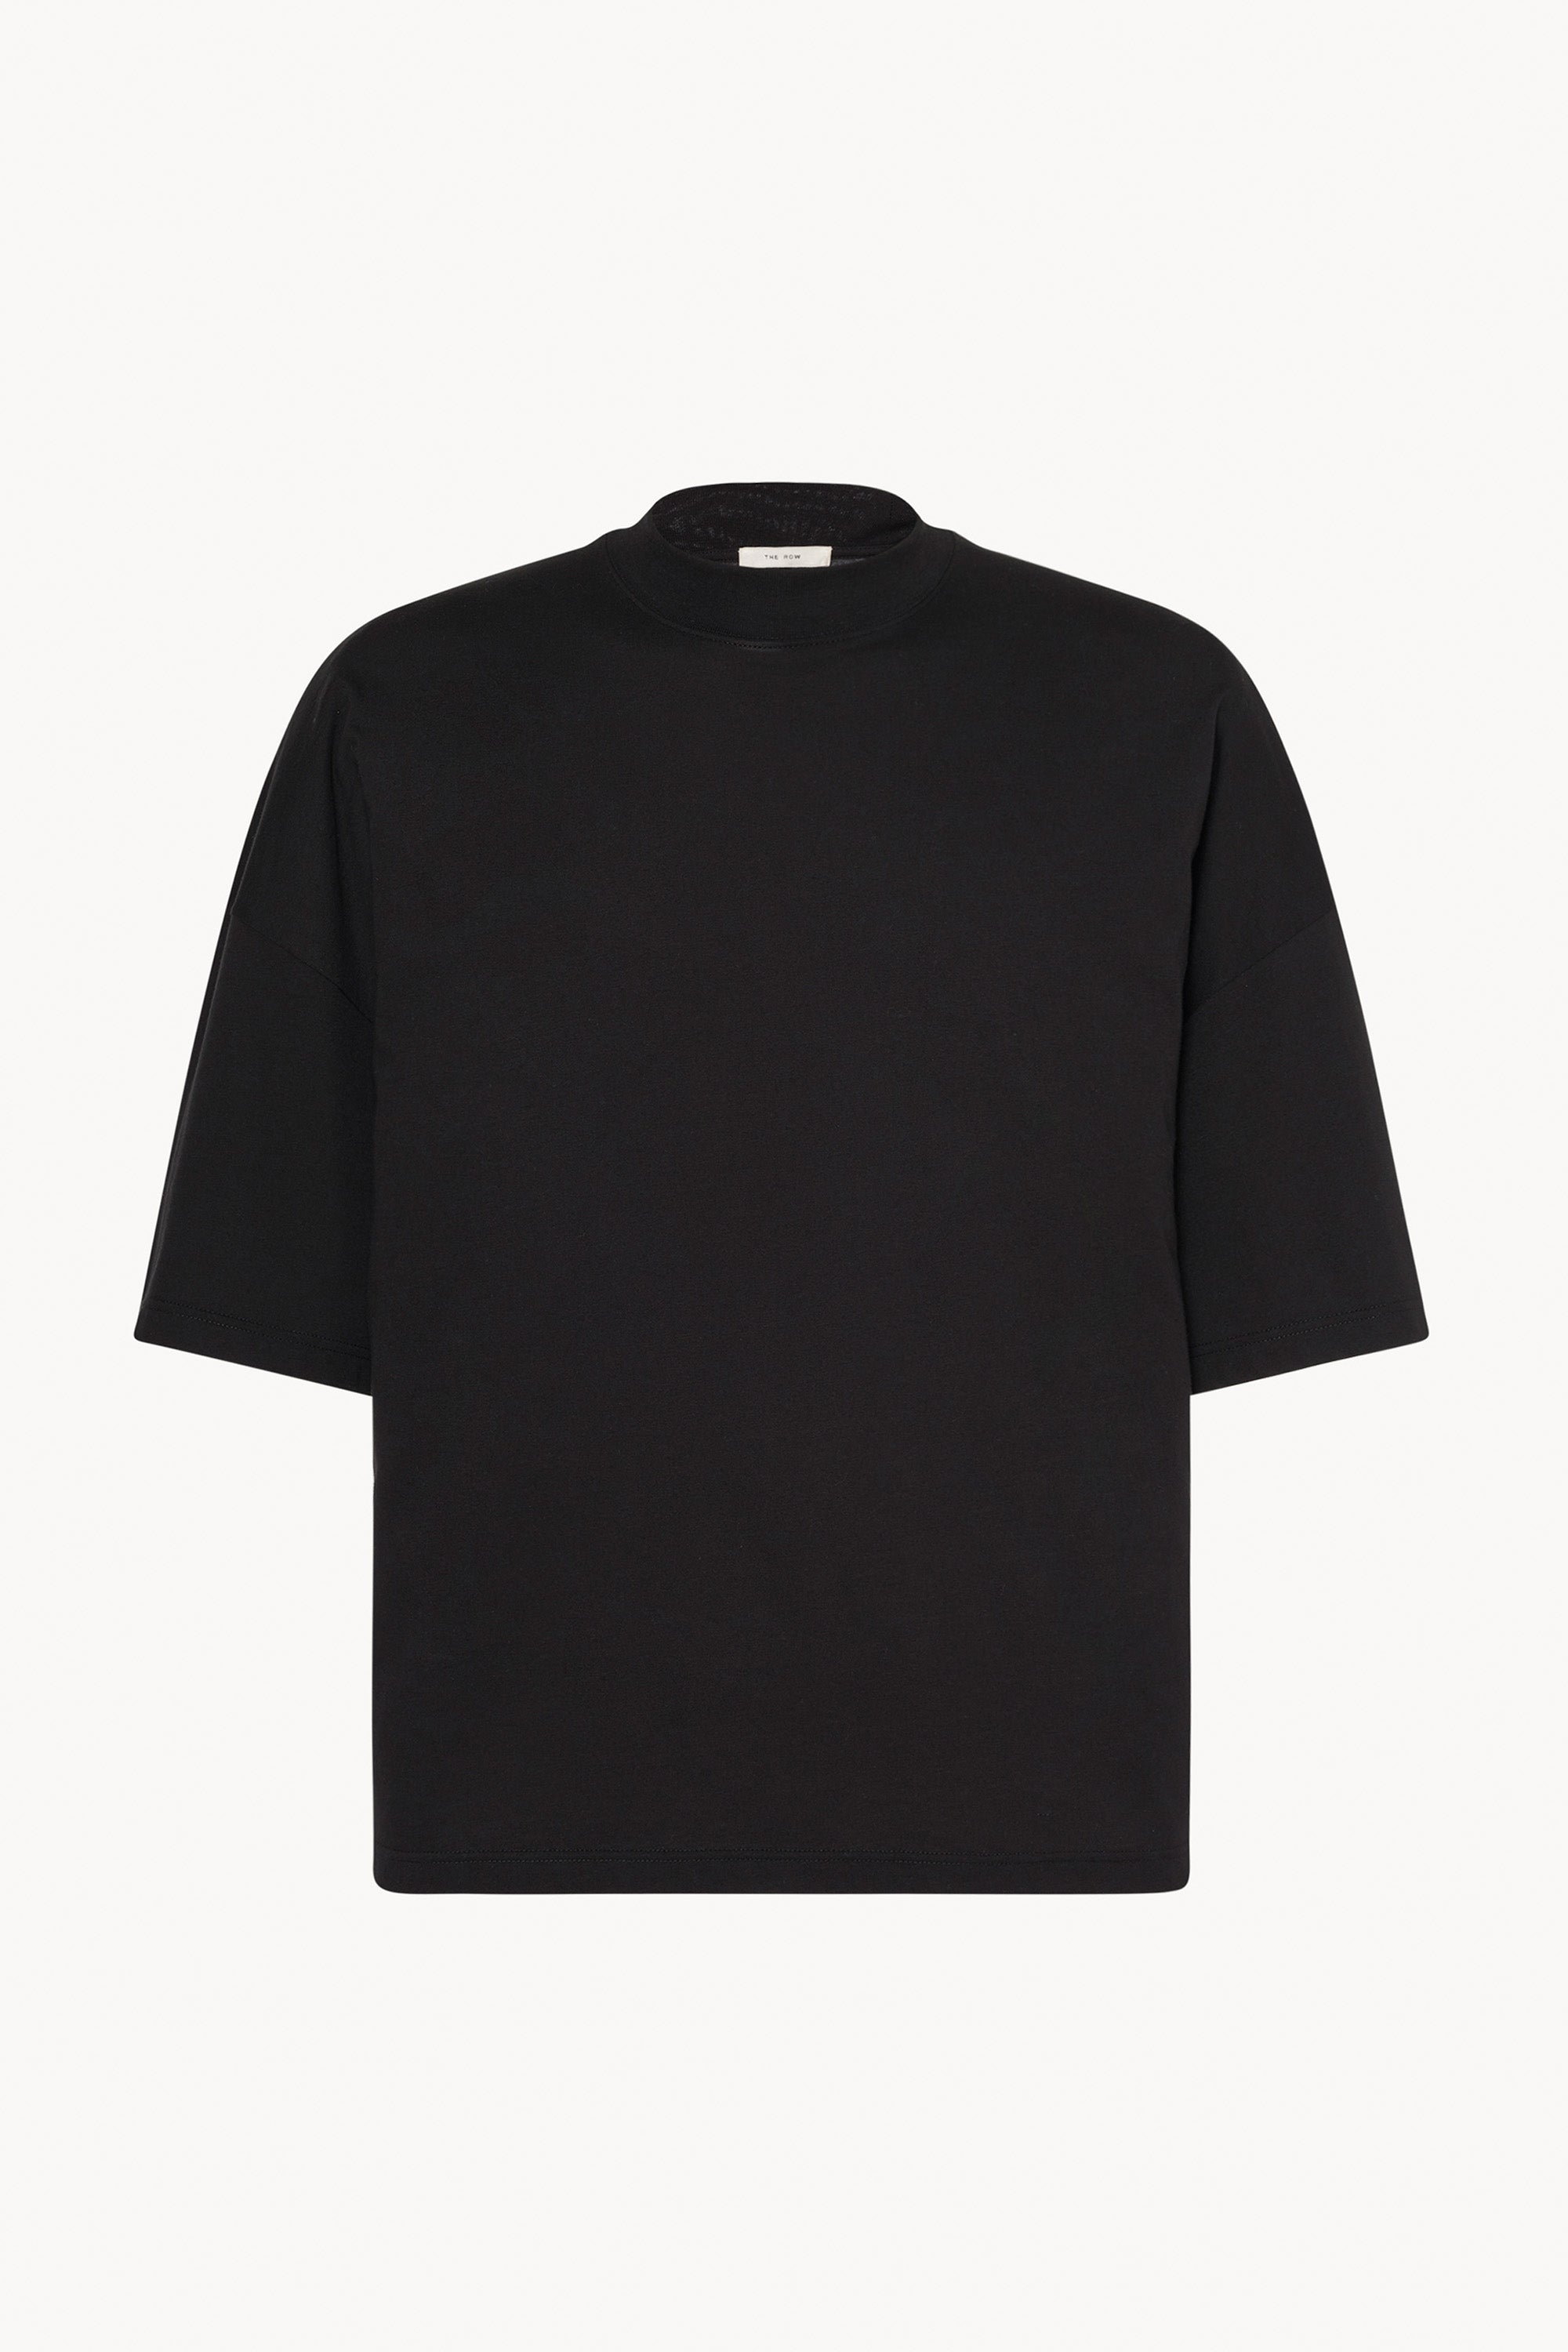 Rown 黒Tシャツ1回のみ着用の美品になります